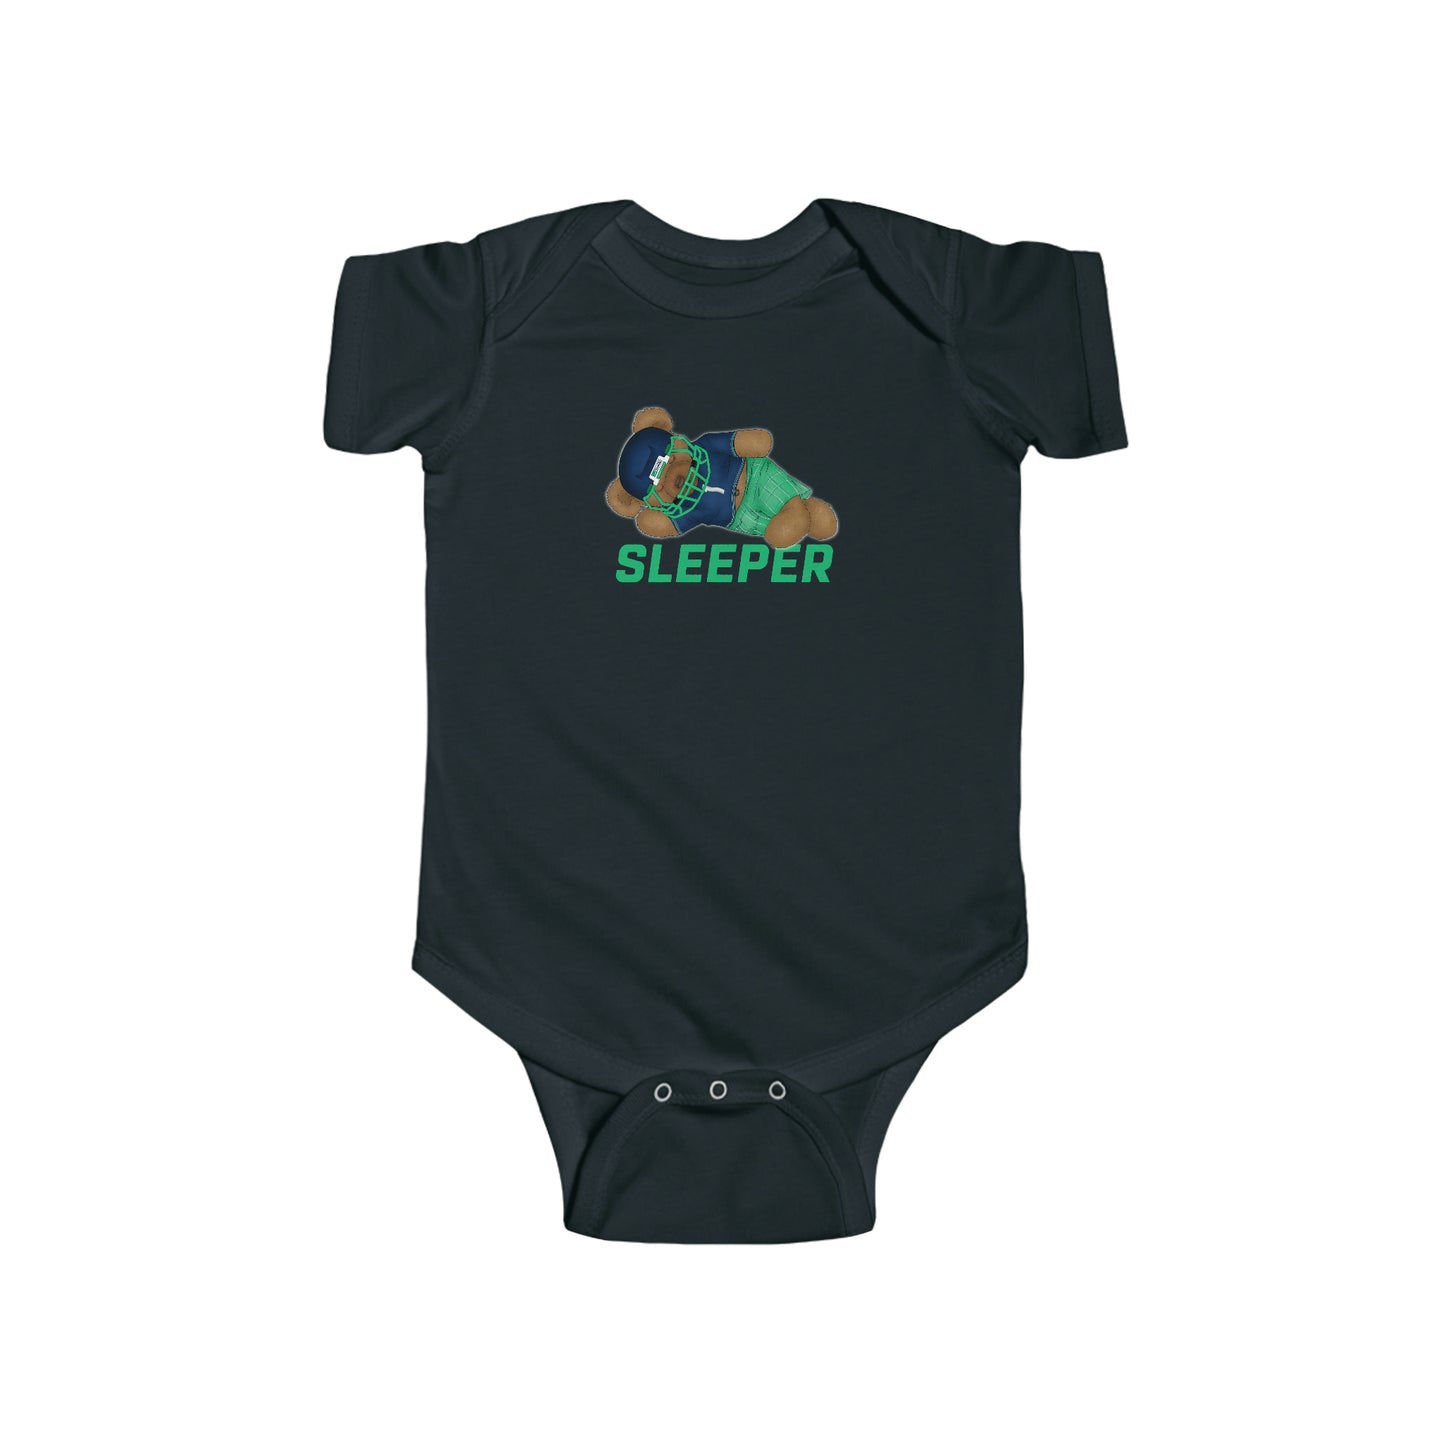 Infant "Sleeper" Bear Onesie - Sleeper Collection - Fantasy Football Baby Clothes